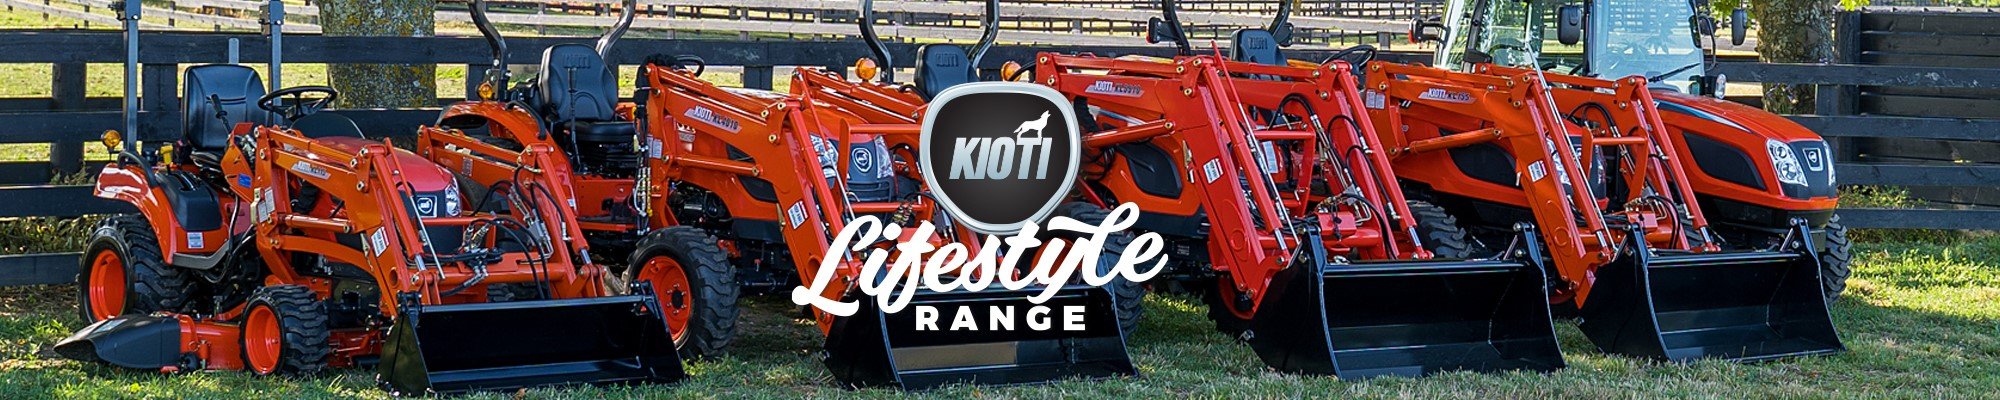 Kioti Lifestyle Range Banner